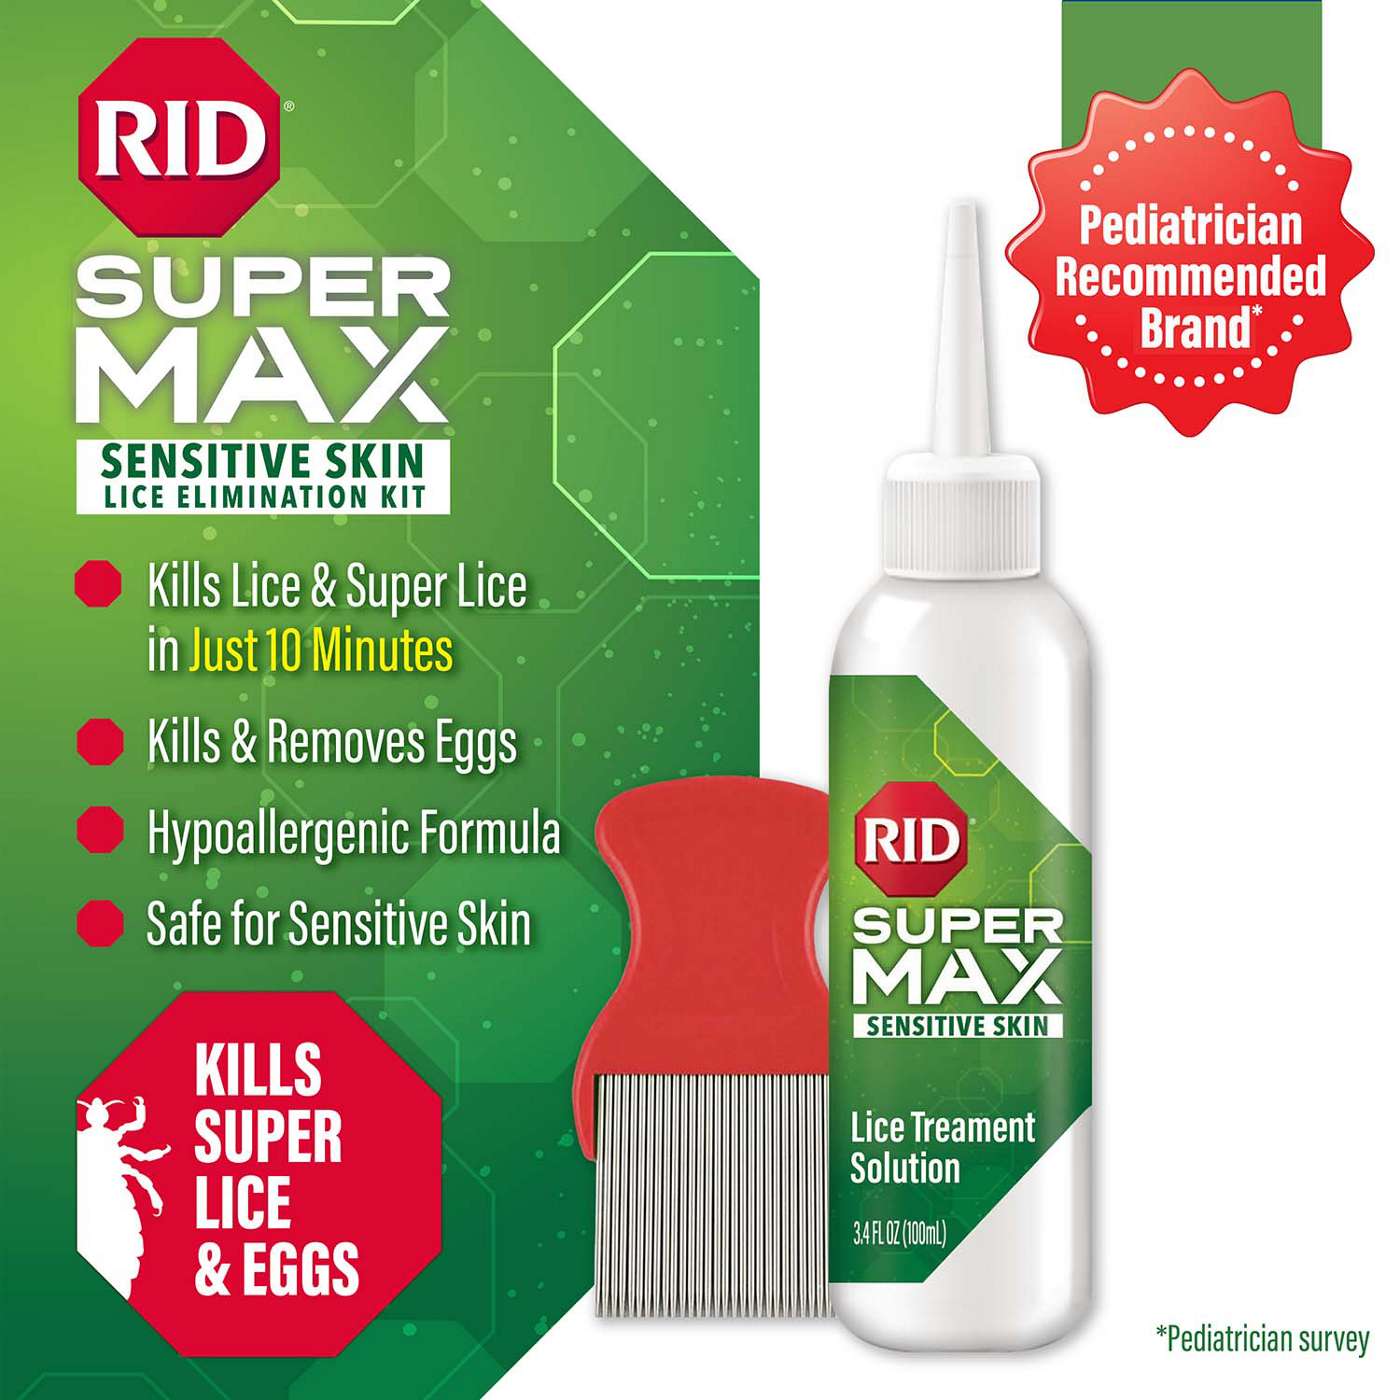 RID Super Max Sensitive Skin Lice Elimination Treatment; image 2 of 6